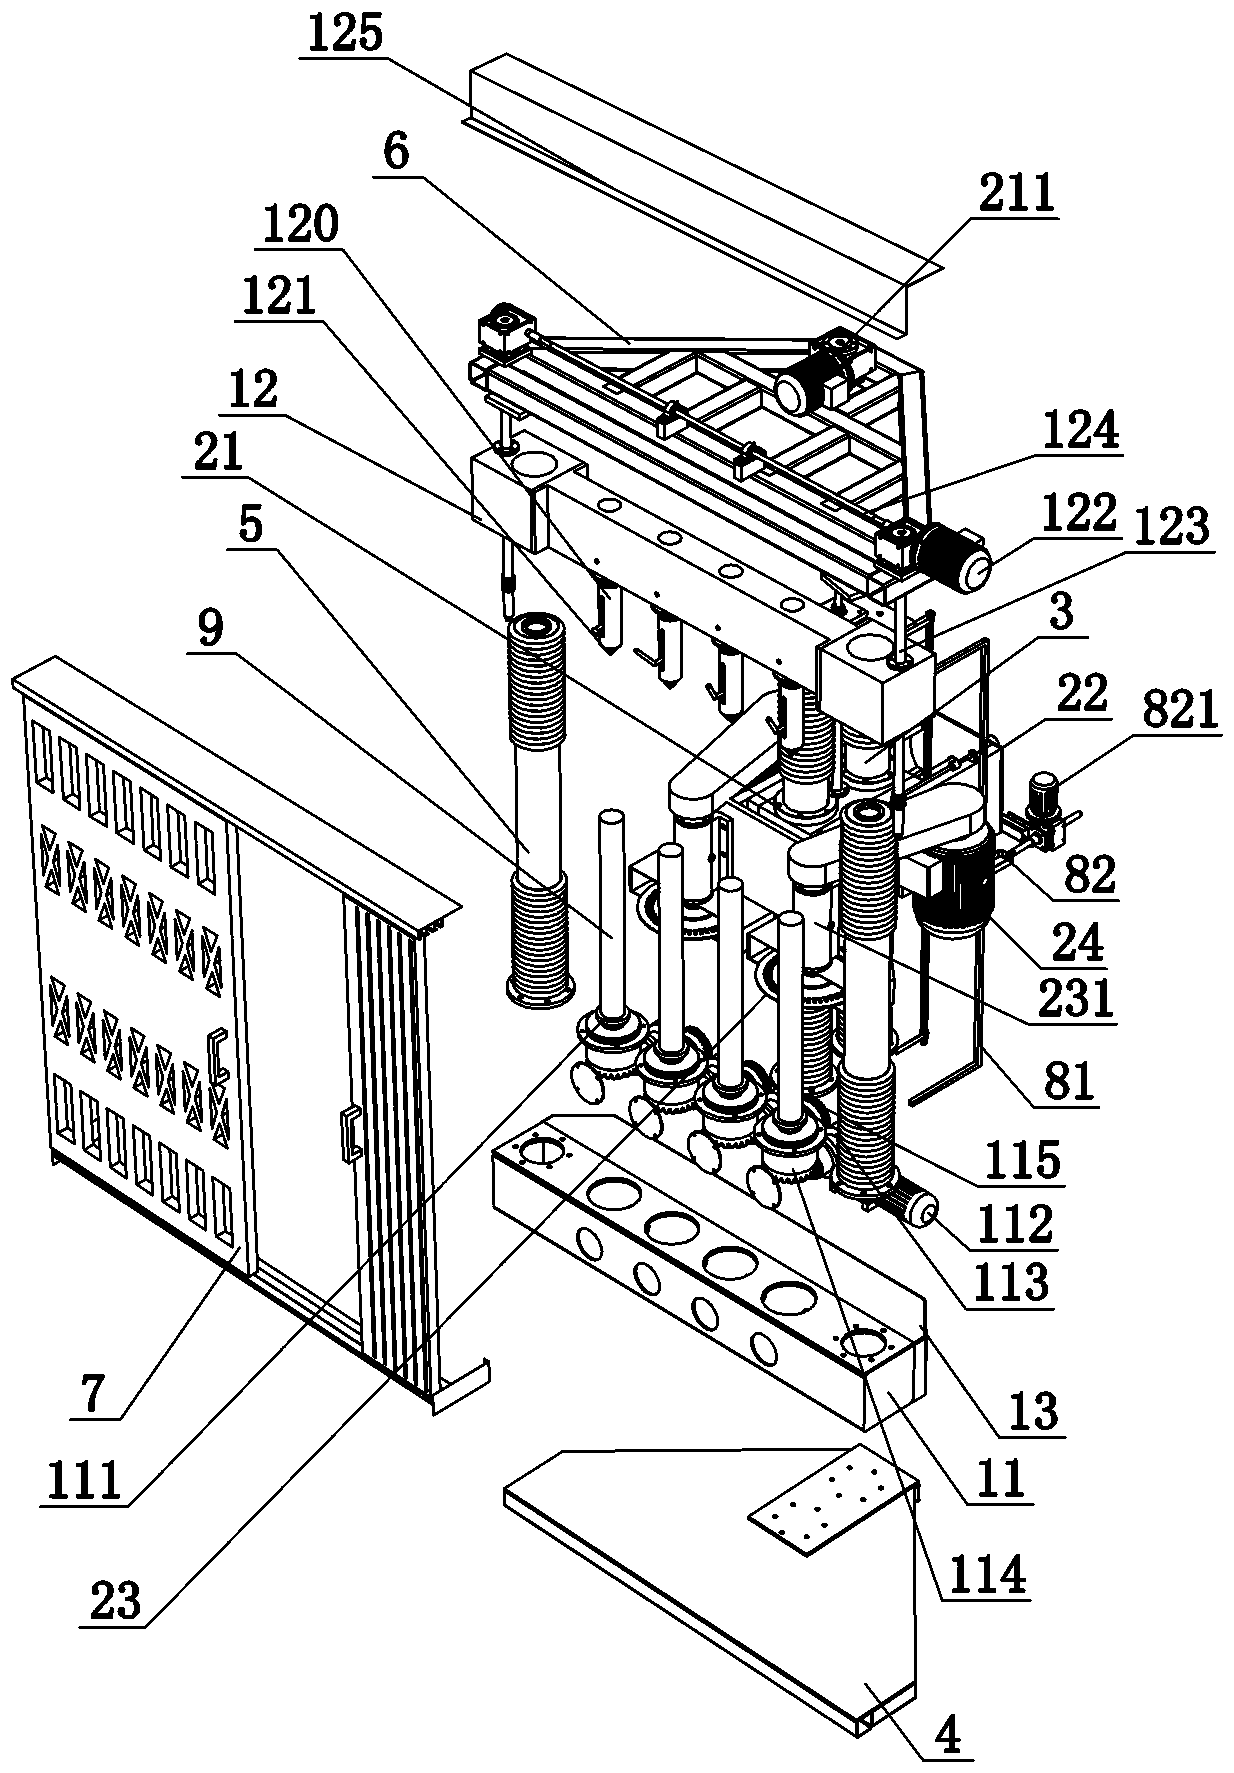 A multi-head vertical stone processing equipment